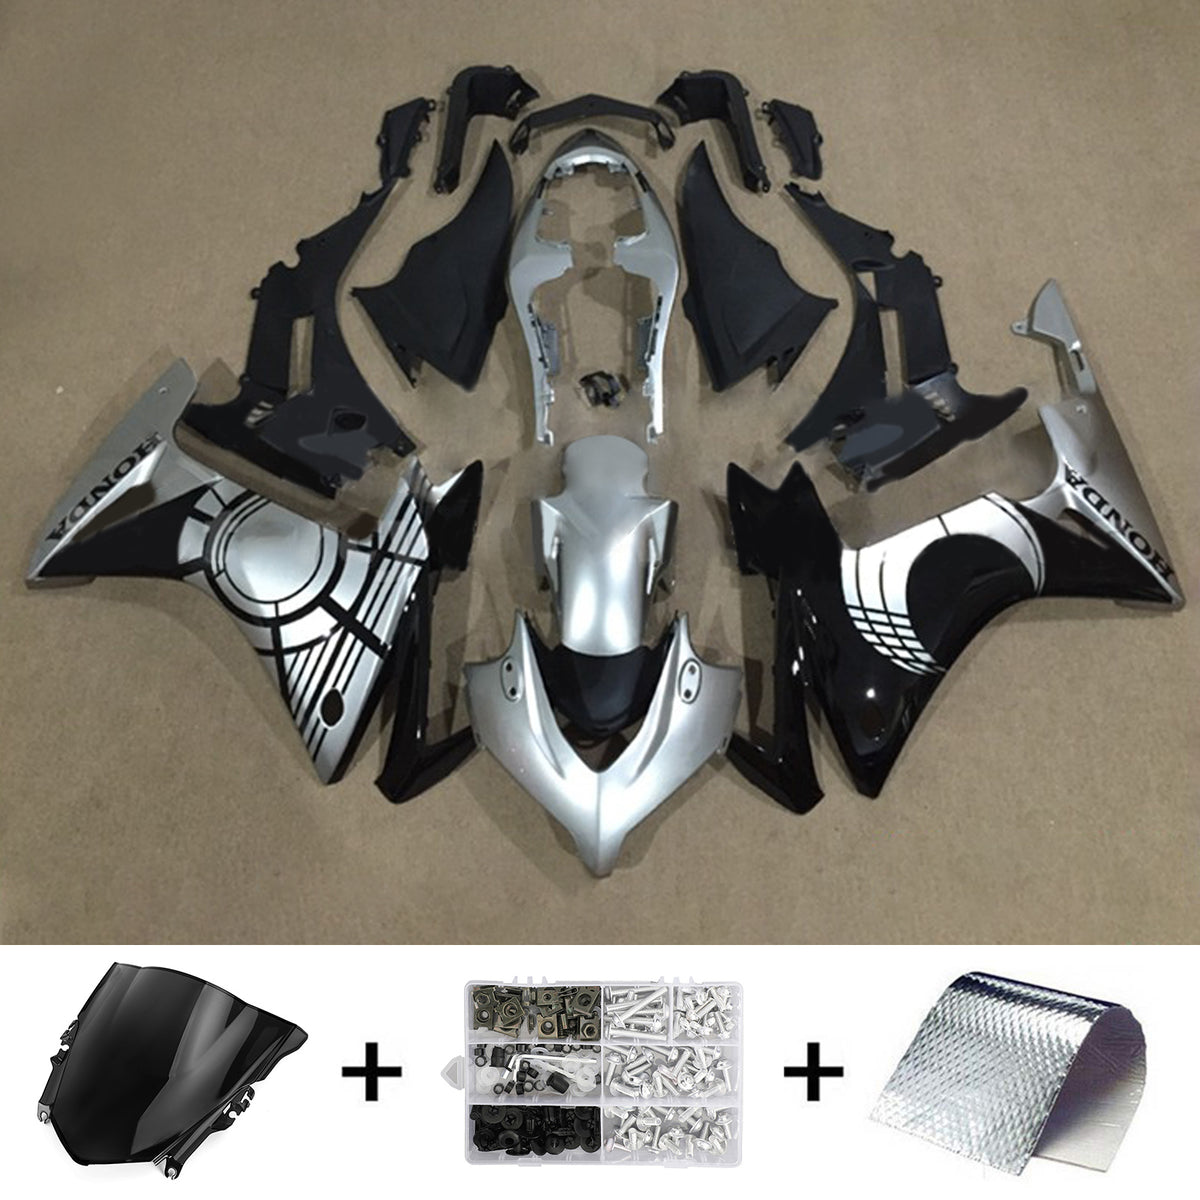 Kit carena Amotopart 2013-2015 CBR500R Honda grigio e nero